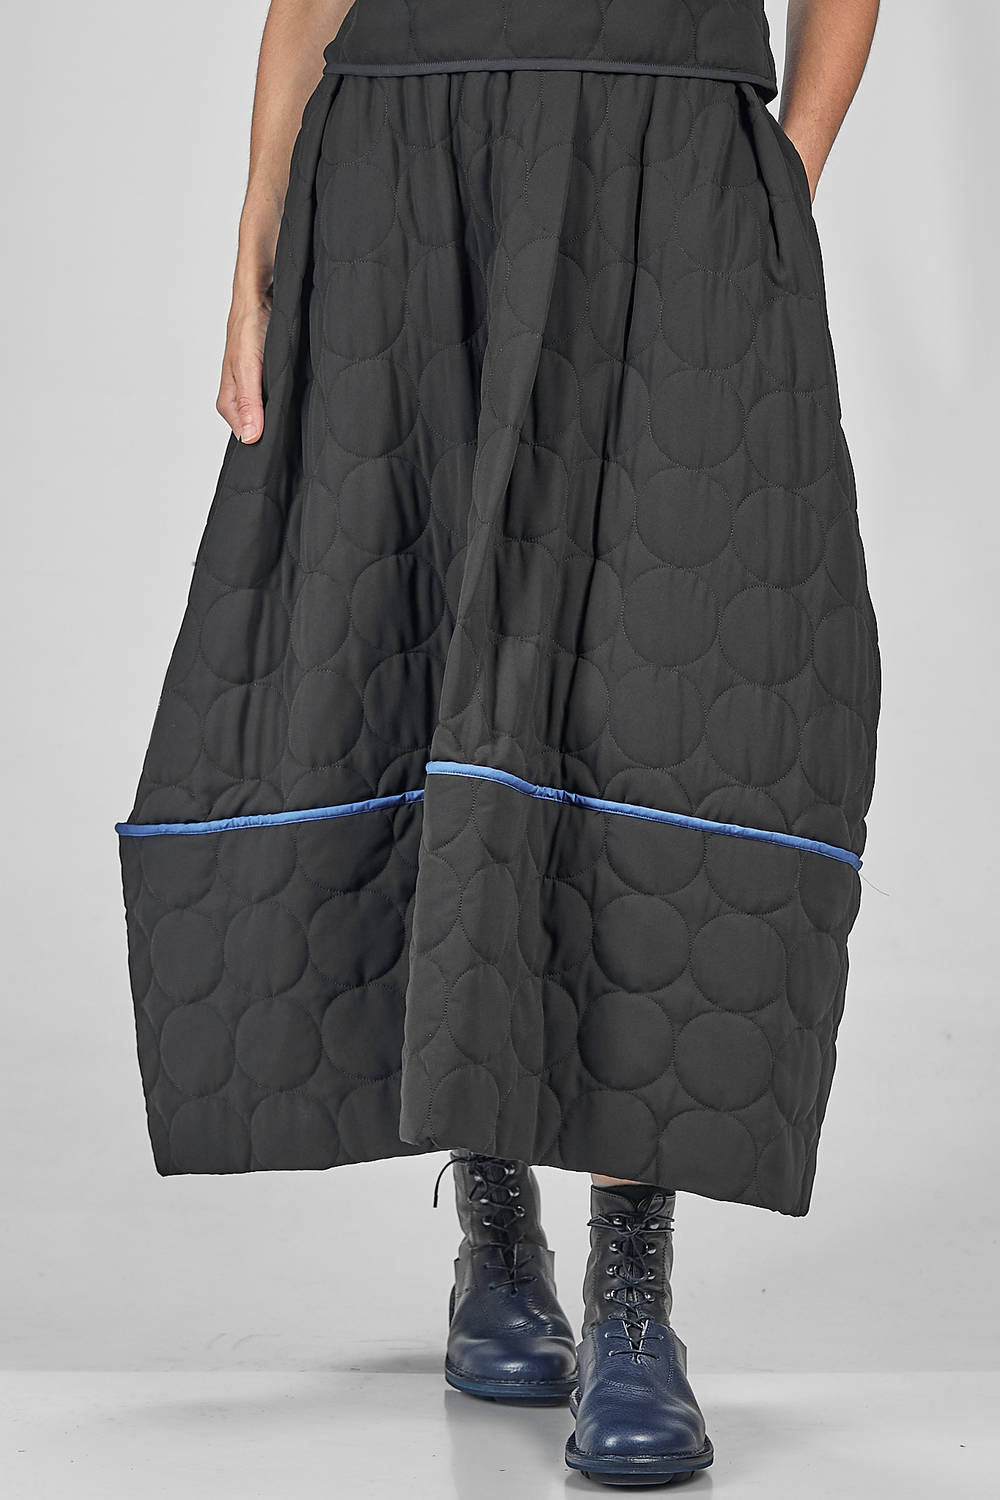 MARIA CALDERARA - Long And Wide Skirt In Matelassé Jersey With